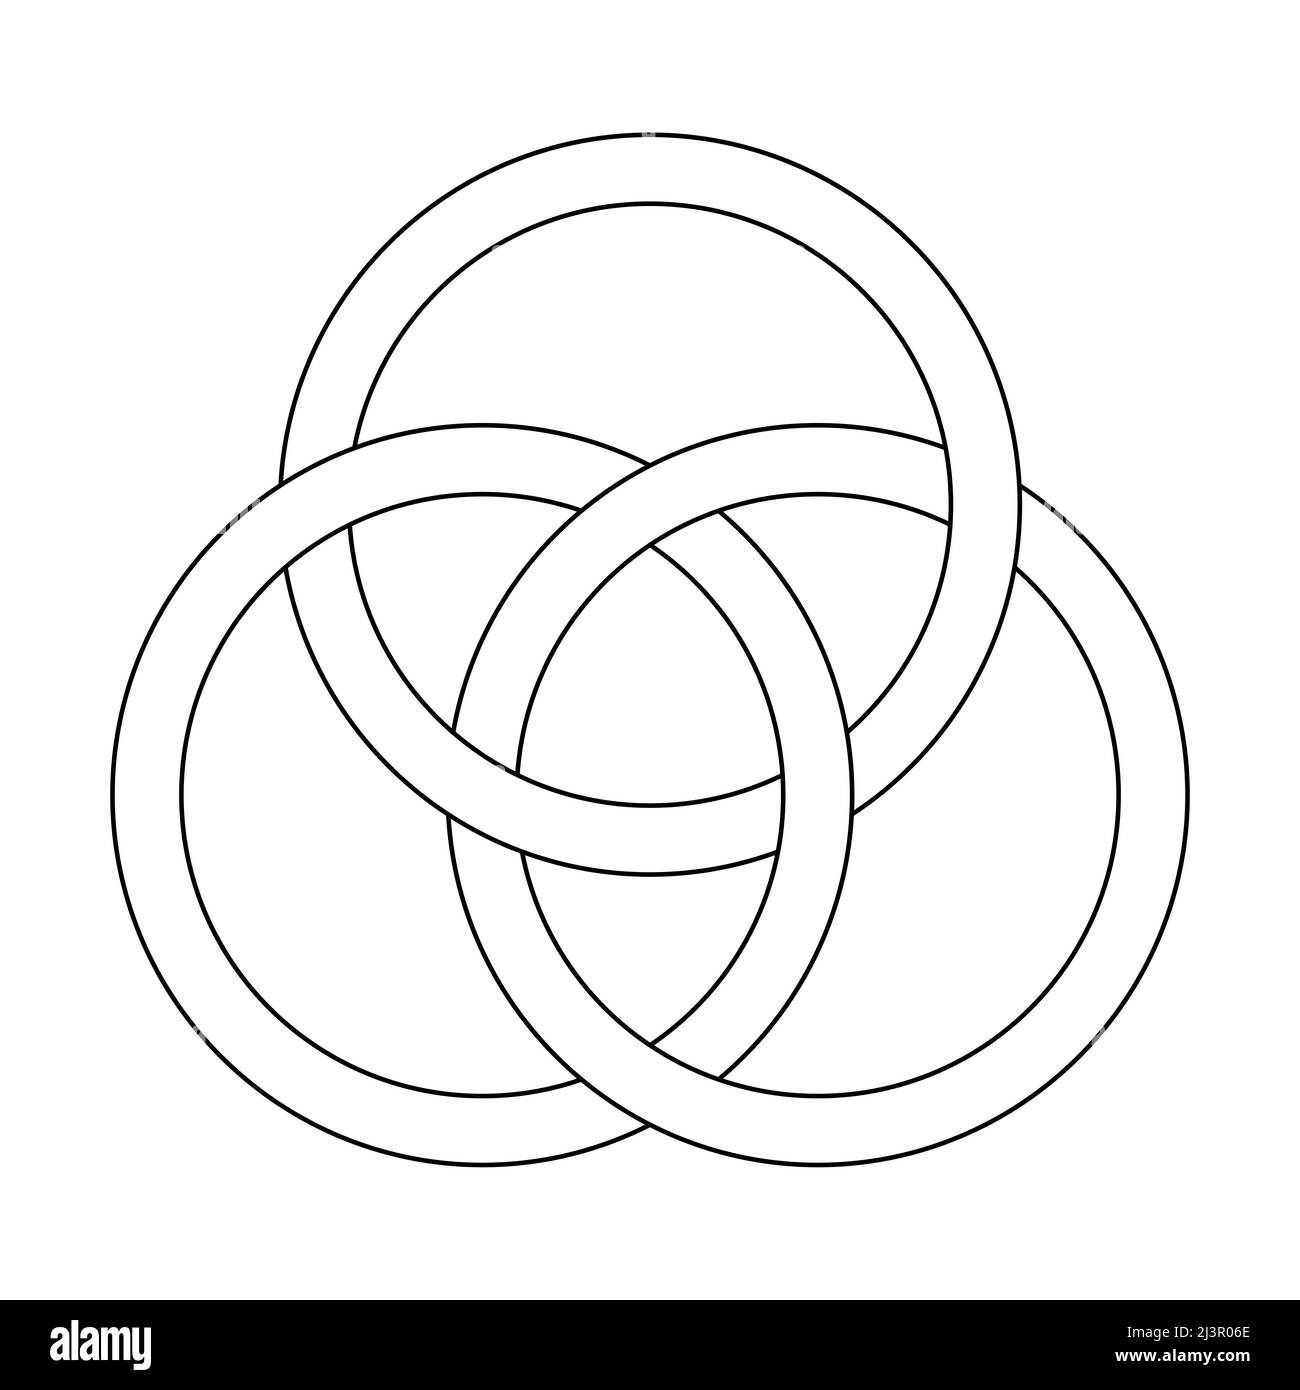 Symbol für Borromäische Ringe Stockfotografie - Alamy